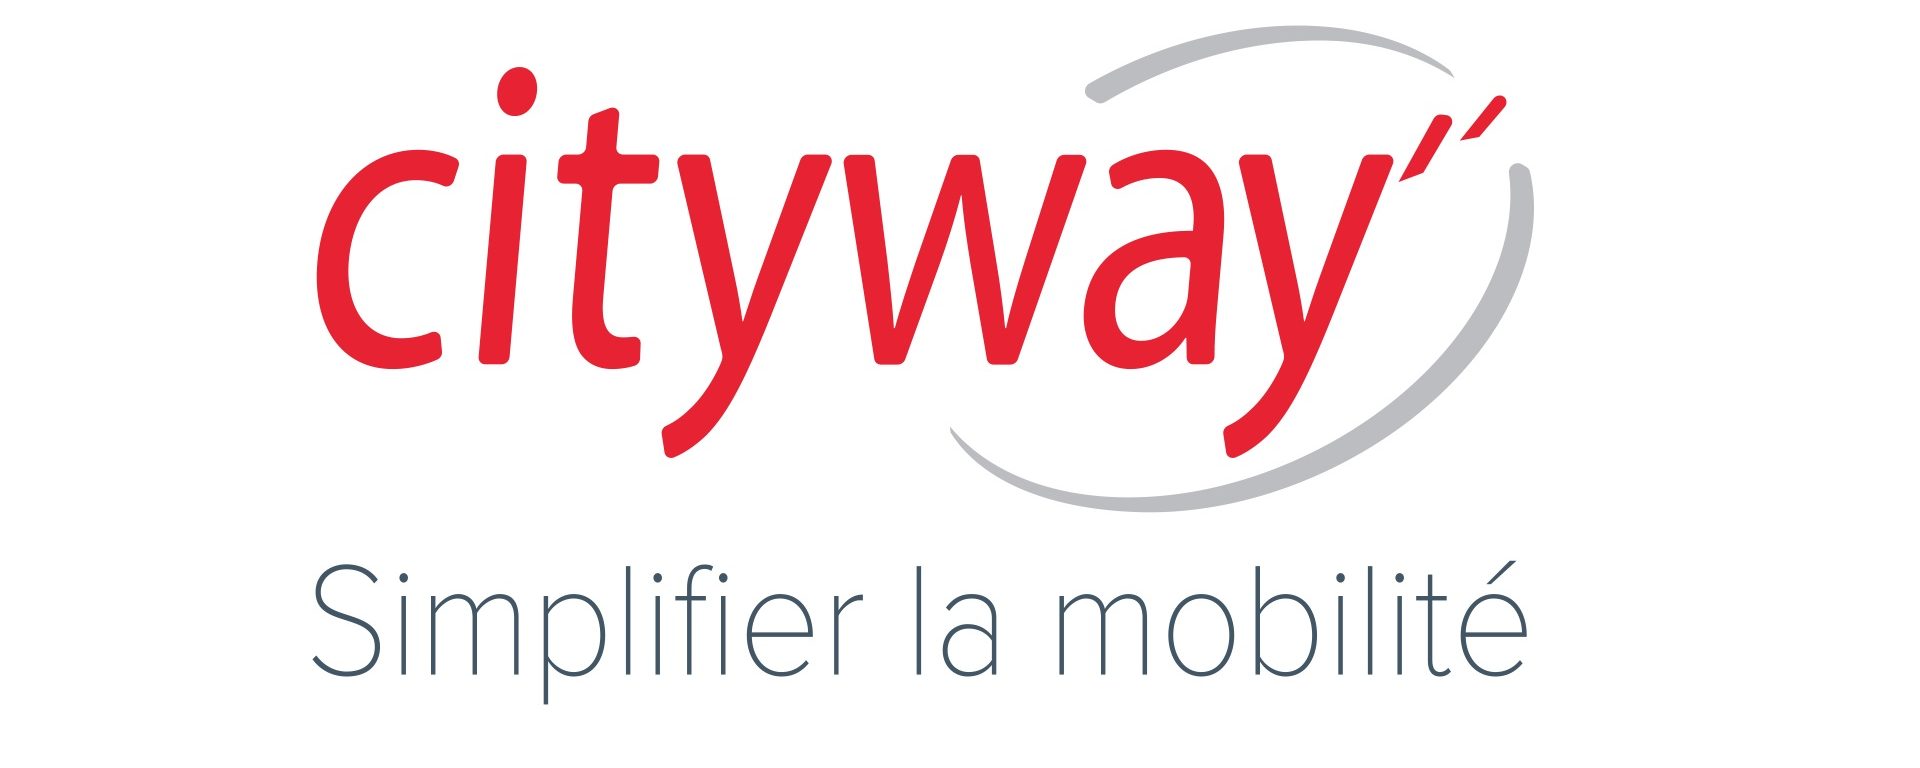 Transdev Logo Cityway-1920x768.jpg